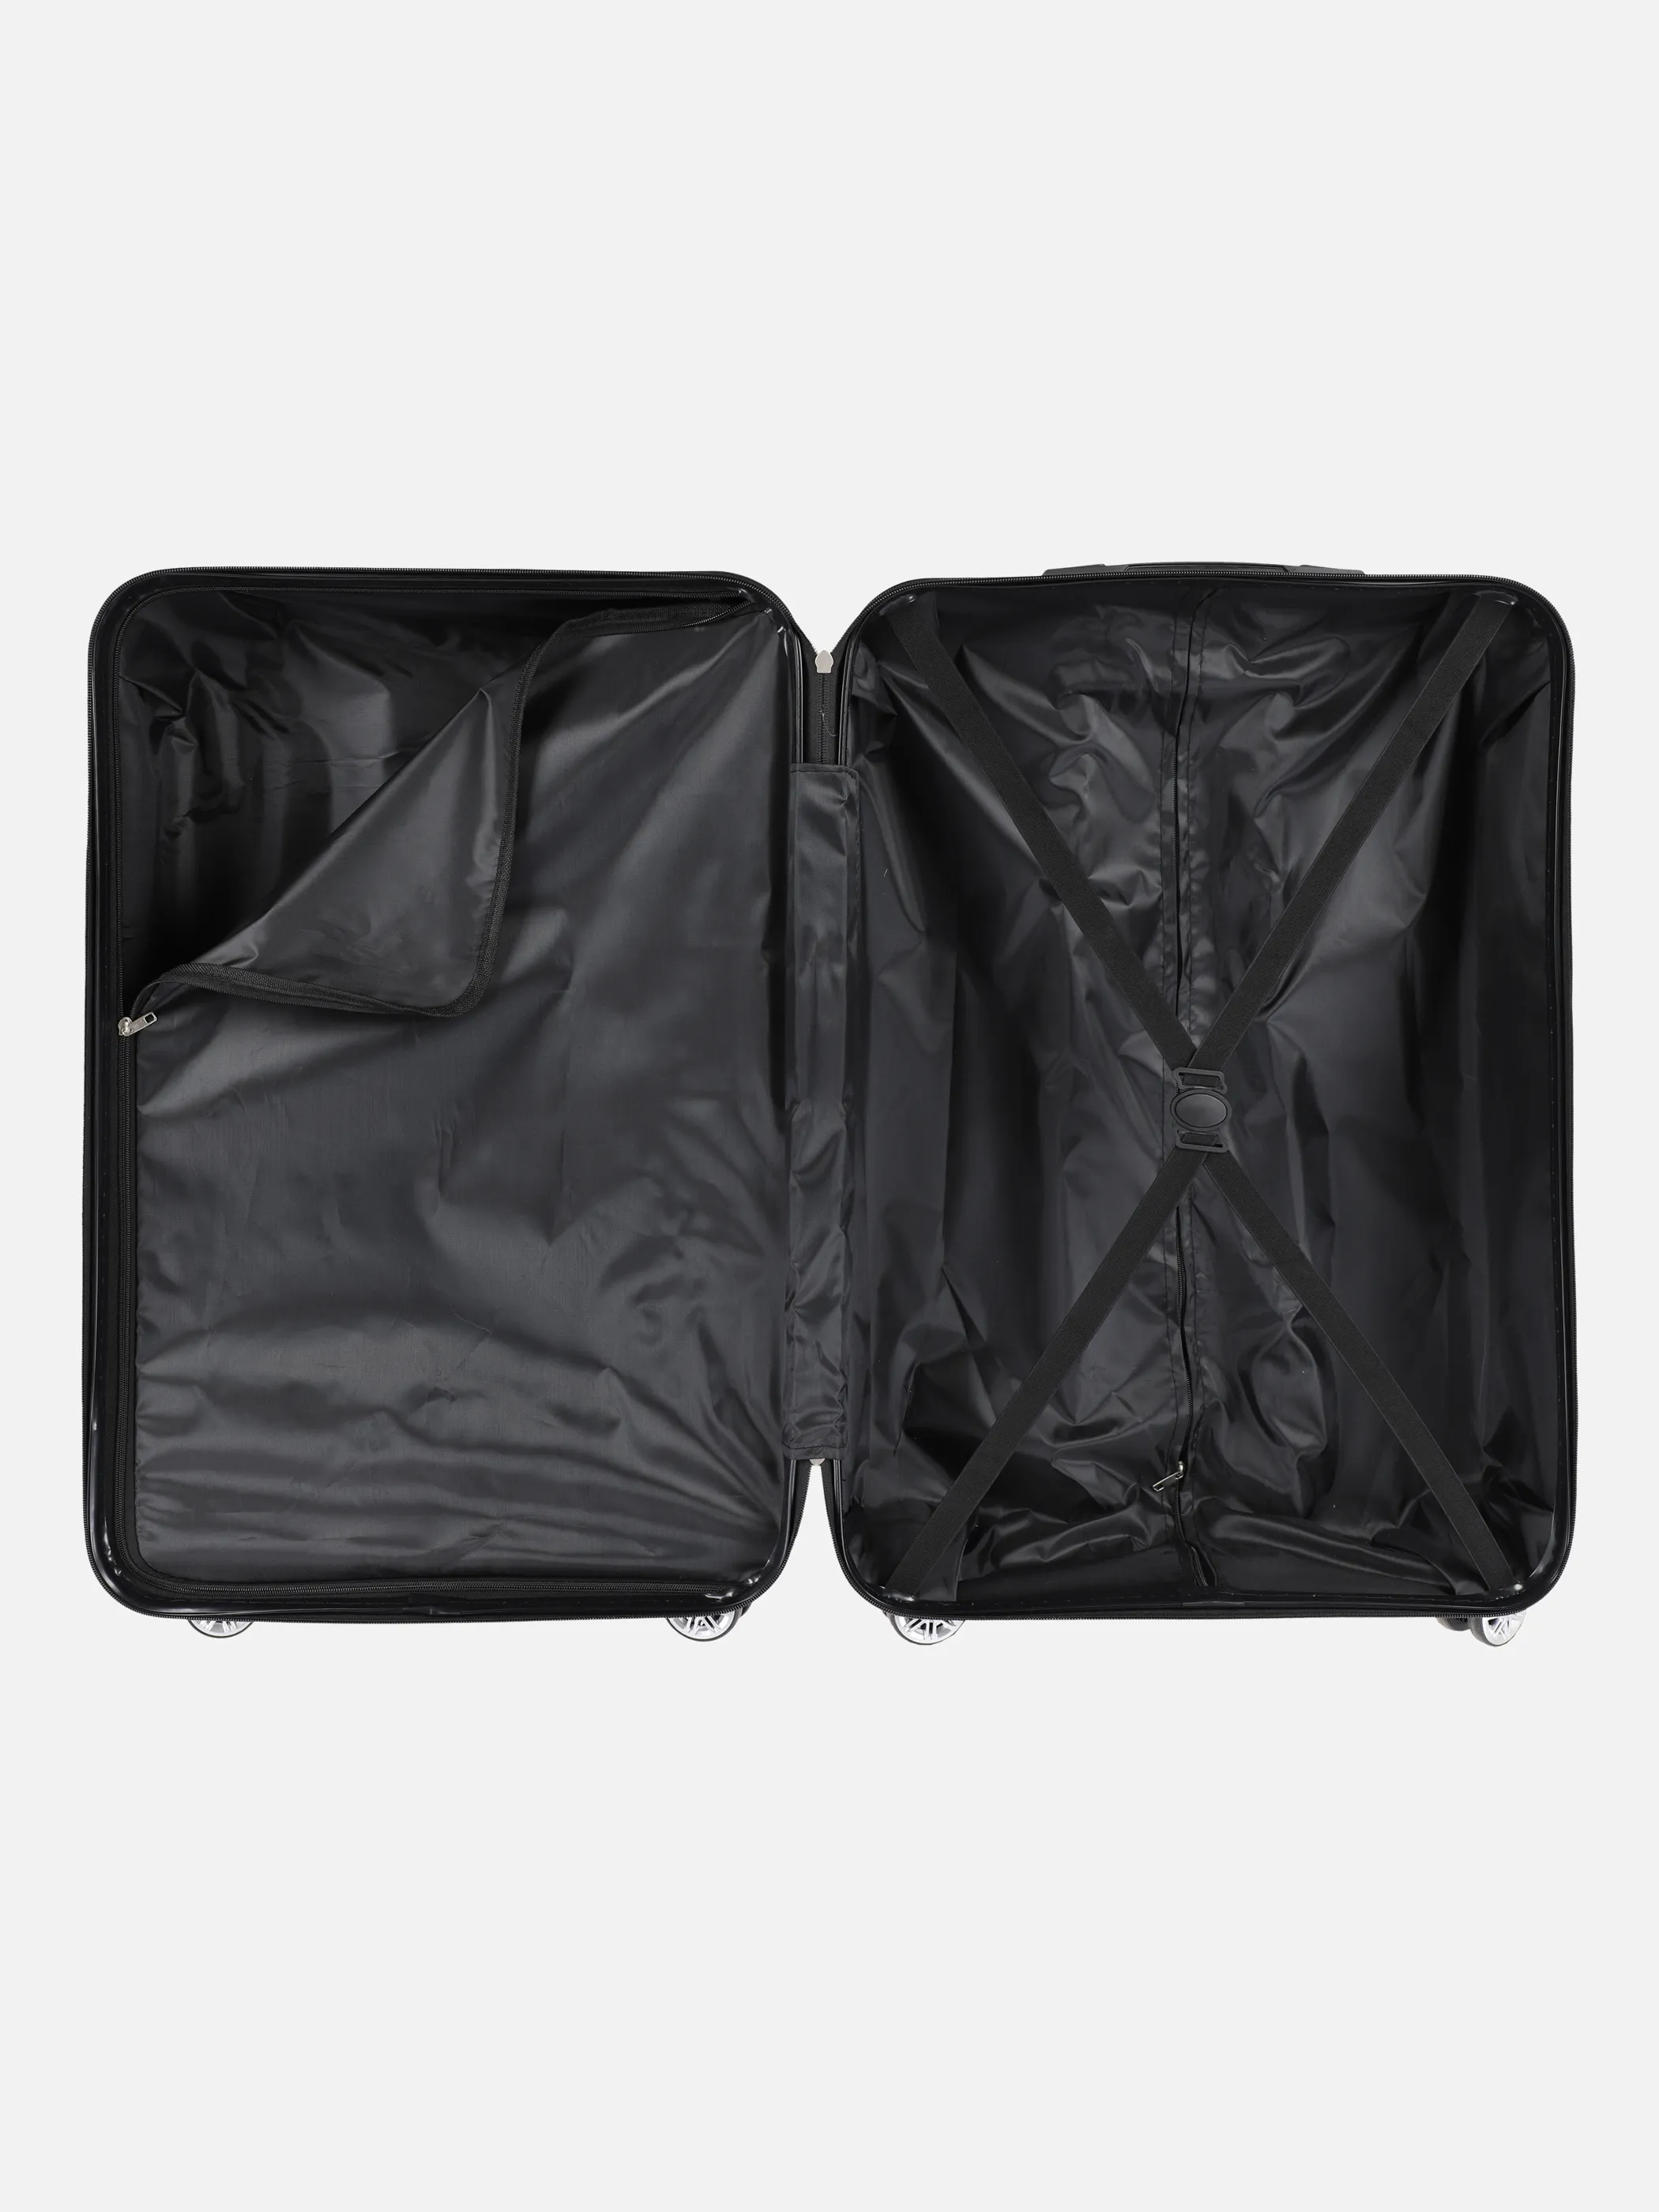 Koffer/Taschen Koffer Avalon Gr. S 57x40x22 Grau 878830 SILBER 3